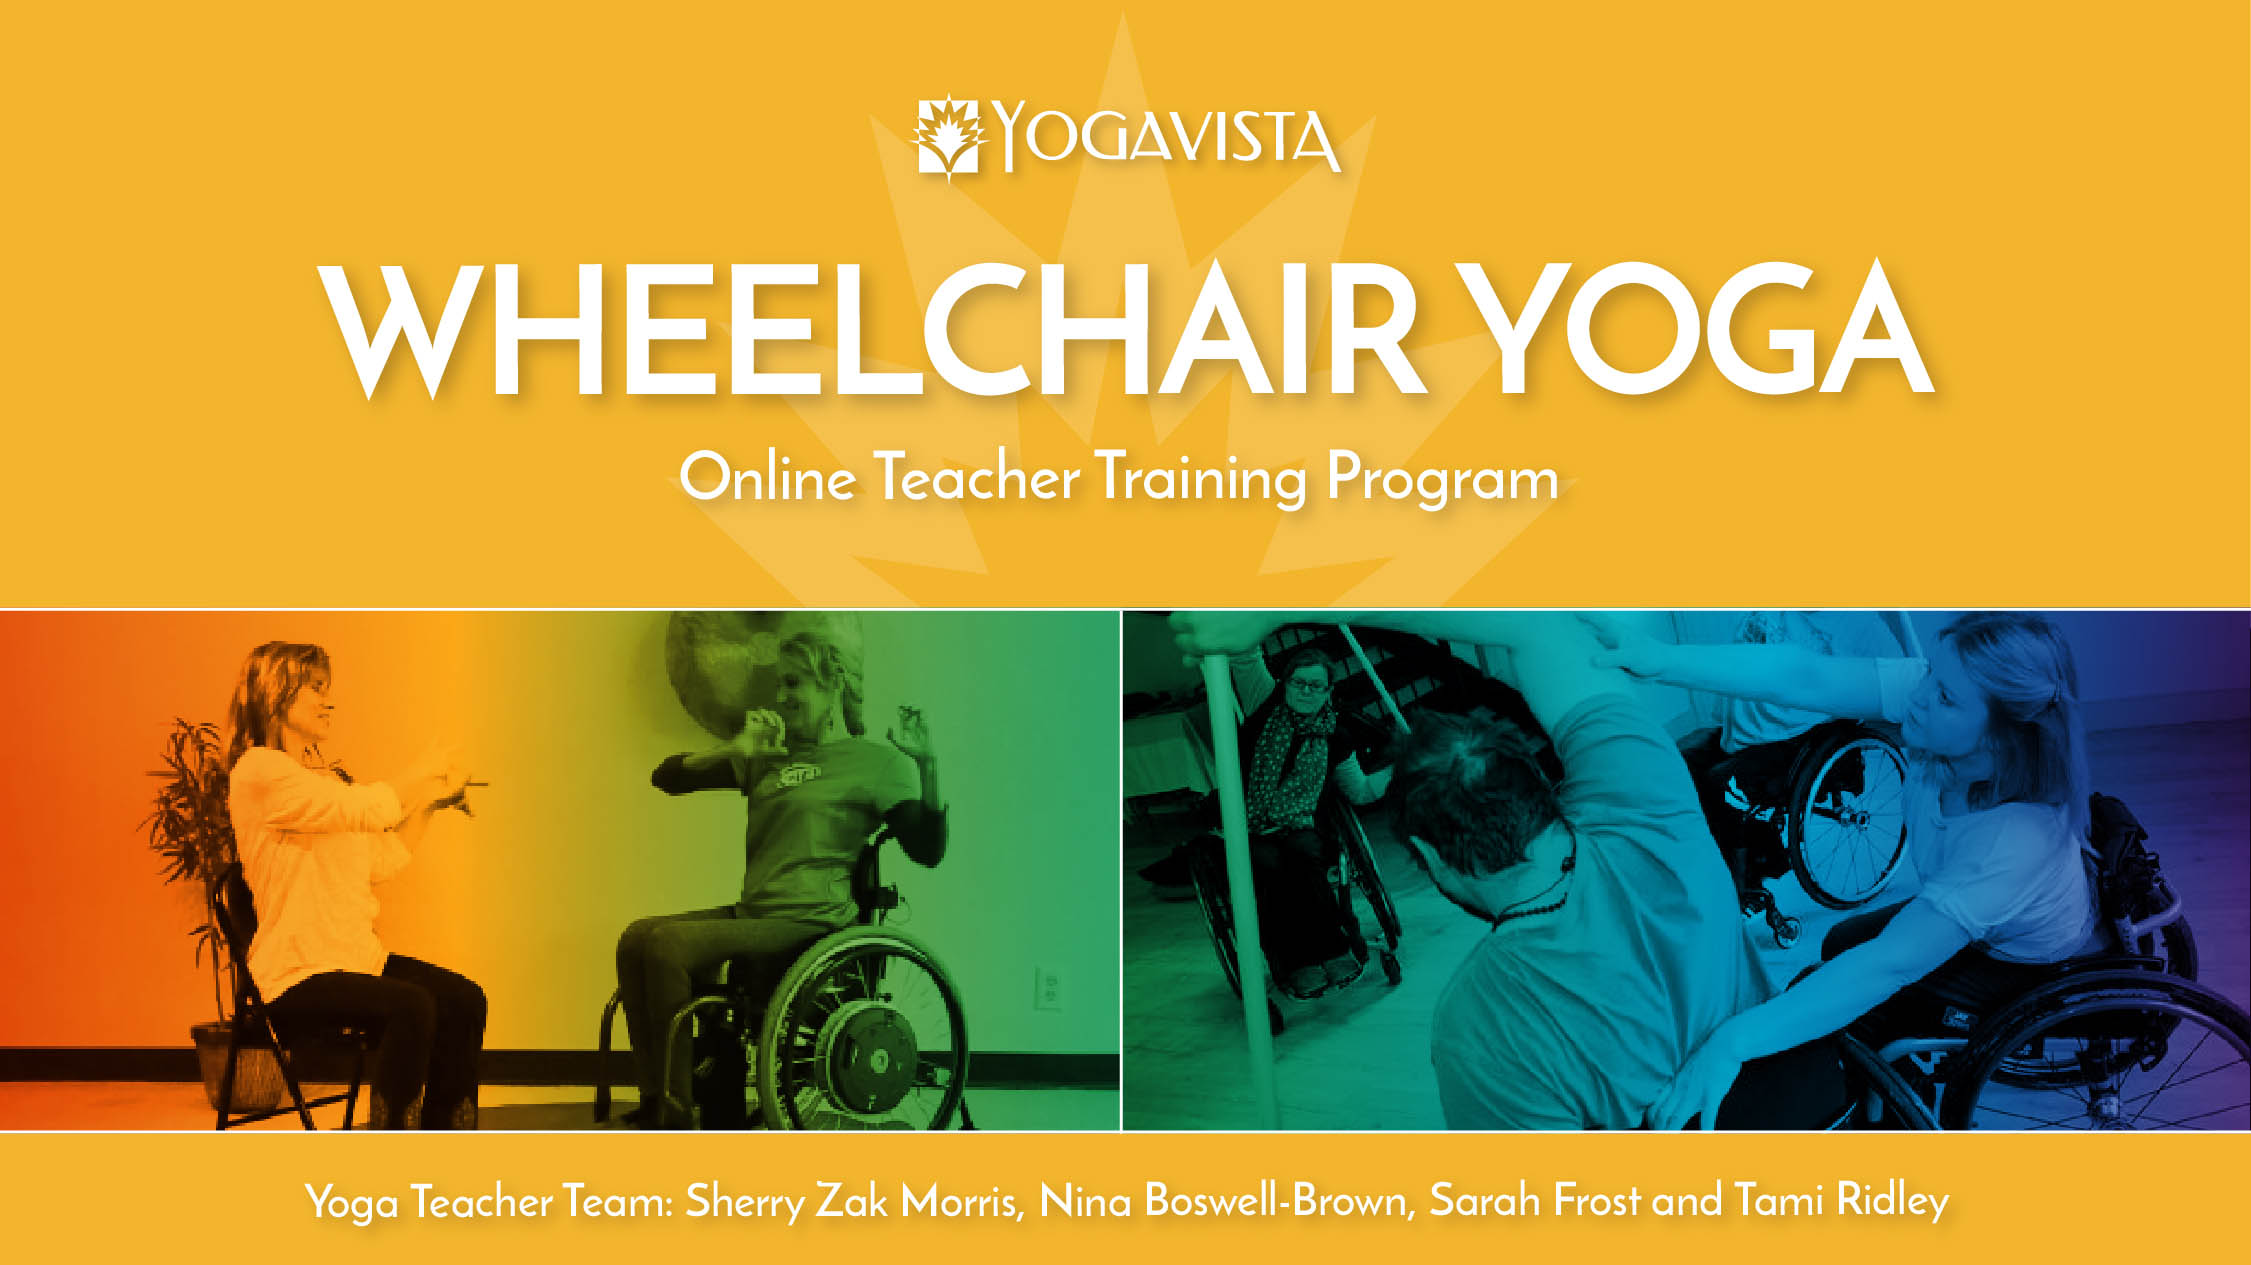 Online Corporate Yoga Teacher Training Program with Sherry Zak Morris